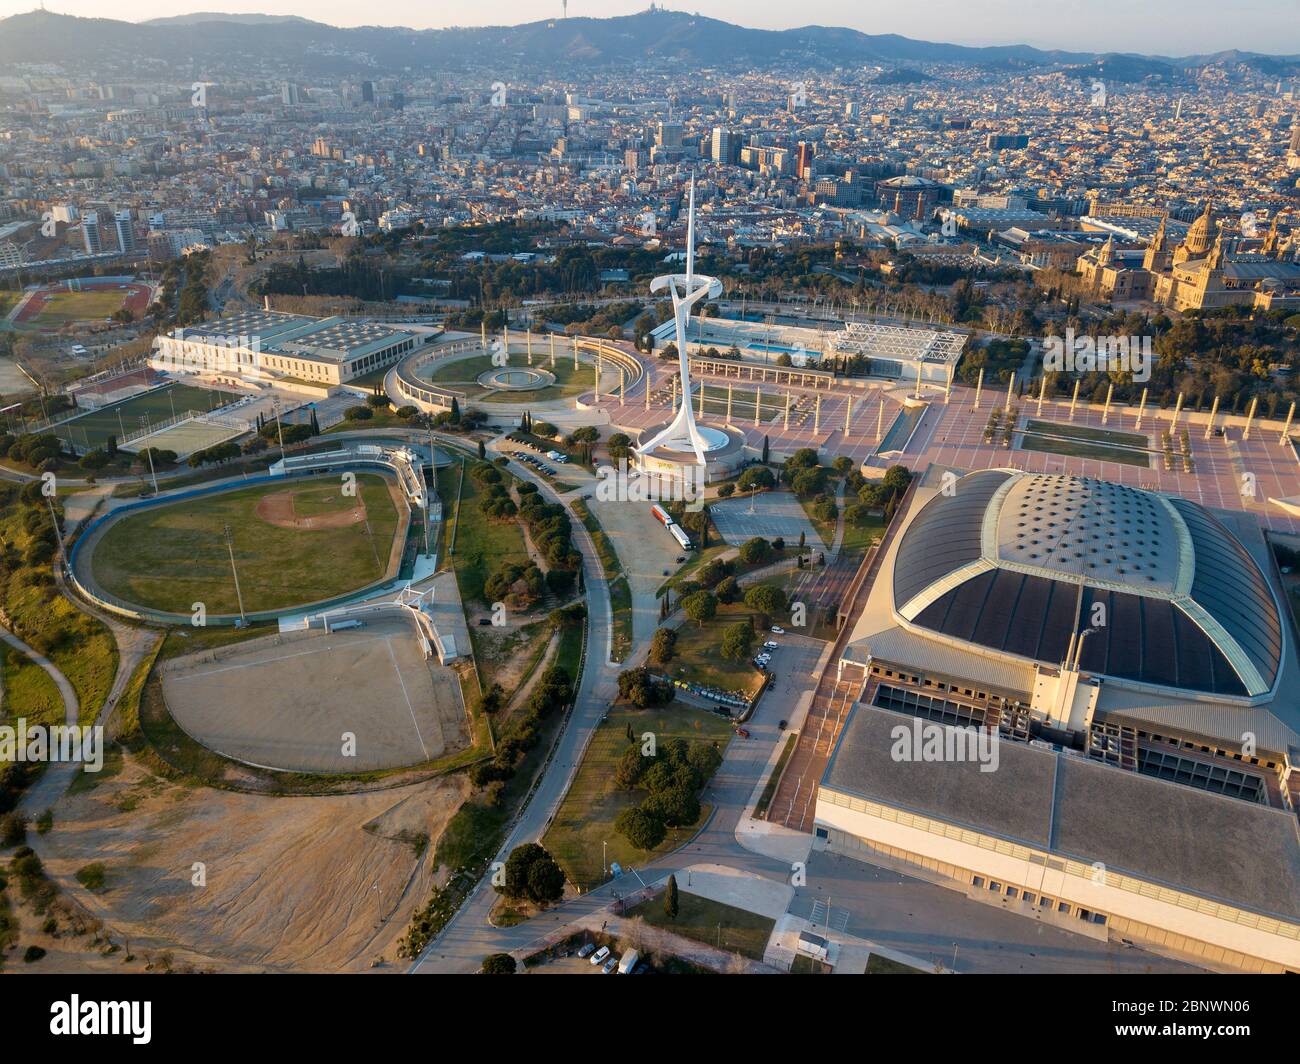 Barcelona 92 olympic games fotografías e imágenes de alta resolución - Alamy